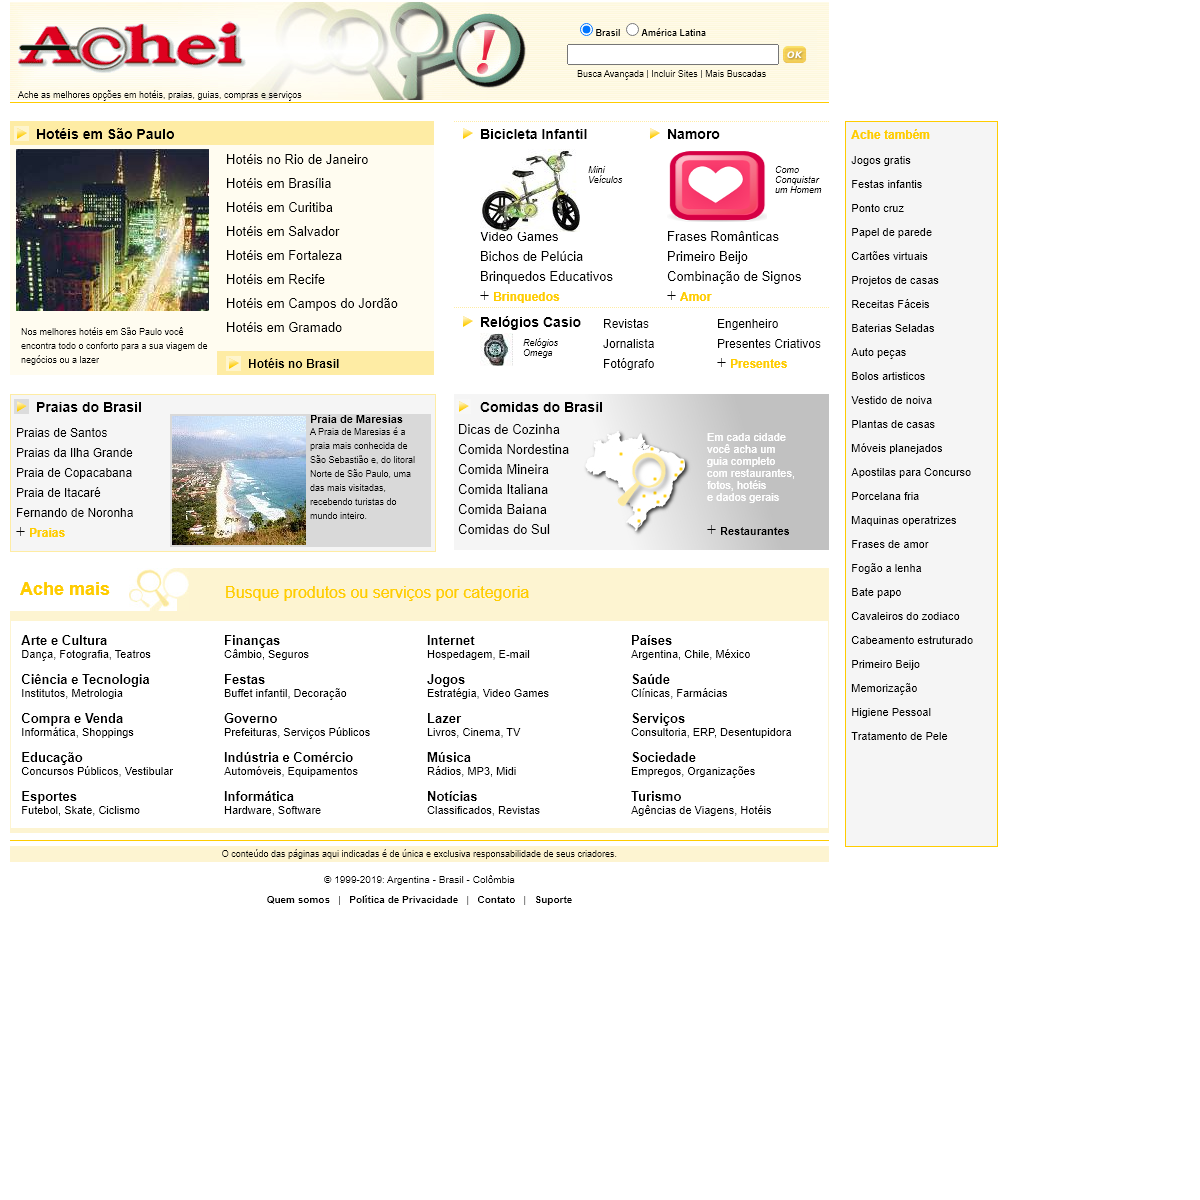 A complete backup of achei.com.br